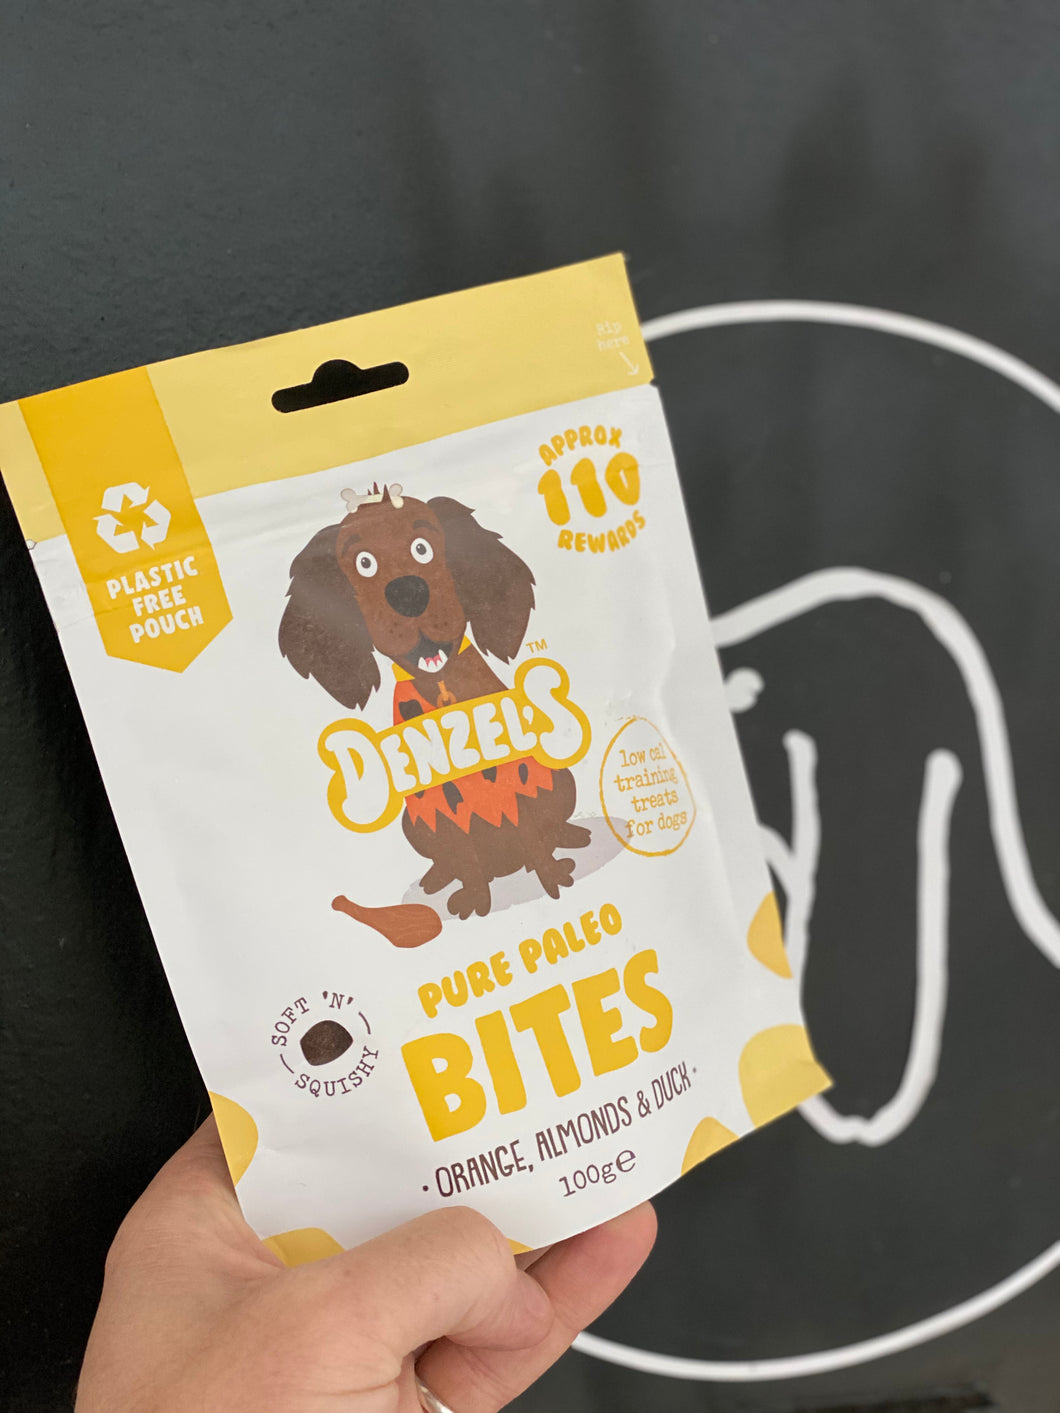 Denzels soft treats bites (Duck/almond/orange flavour)